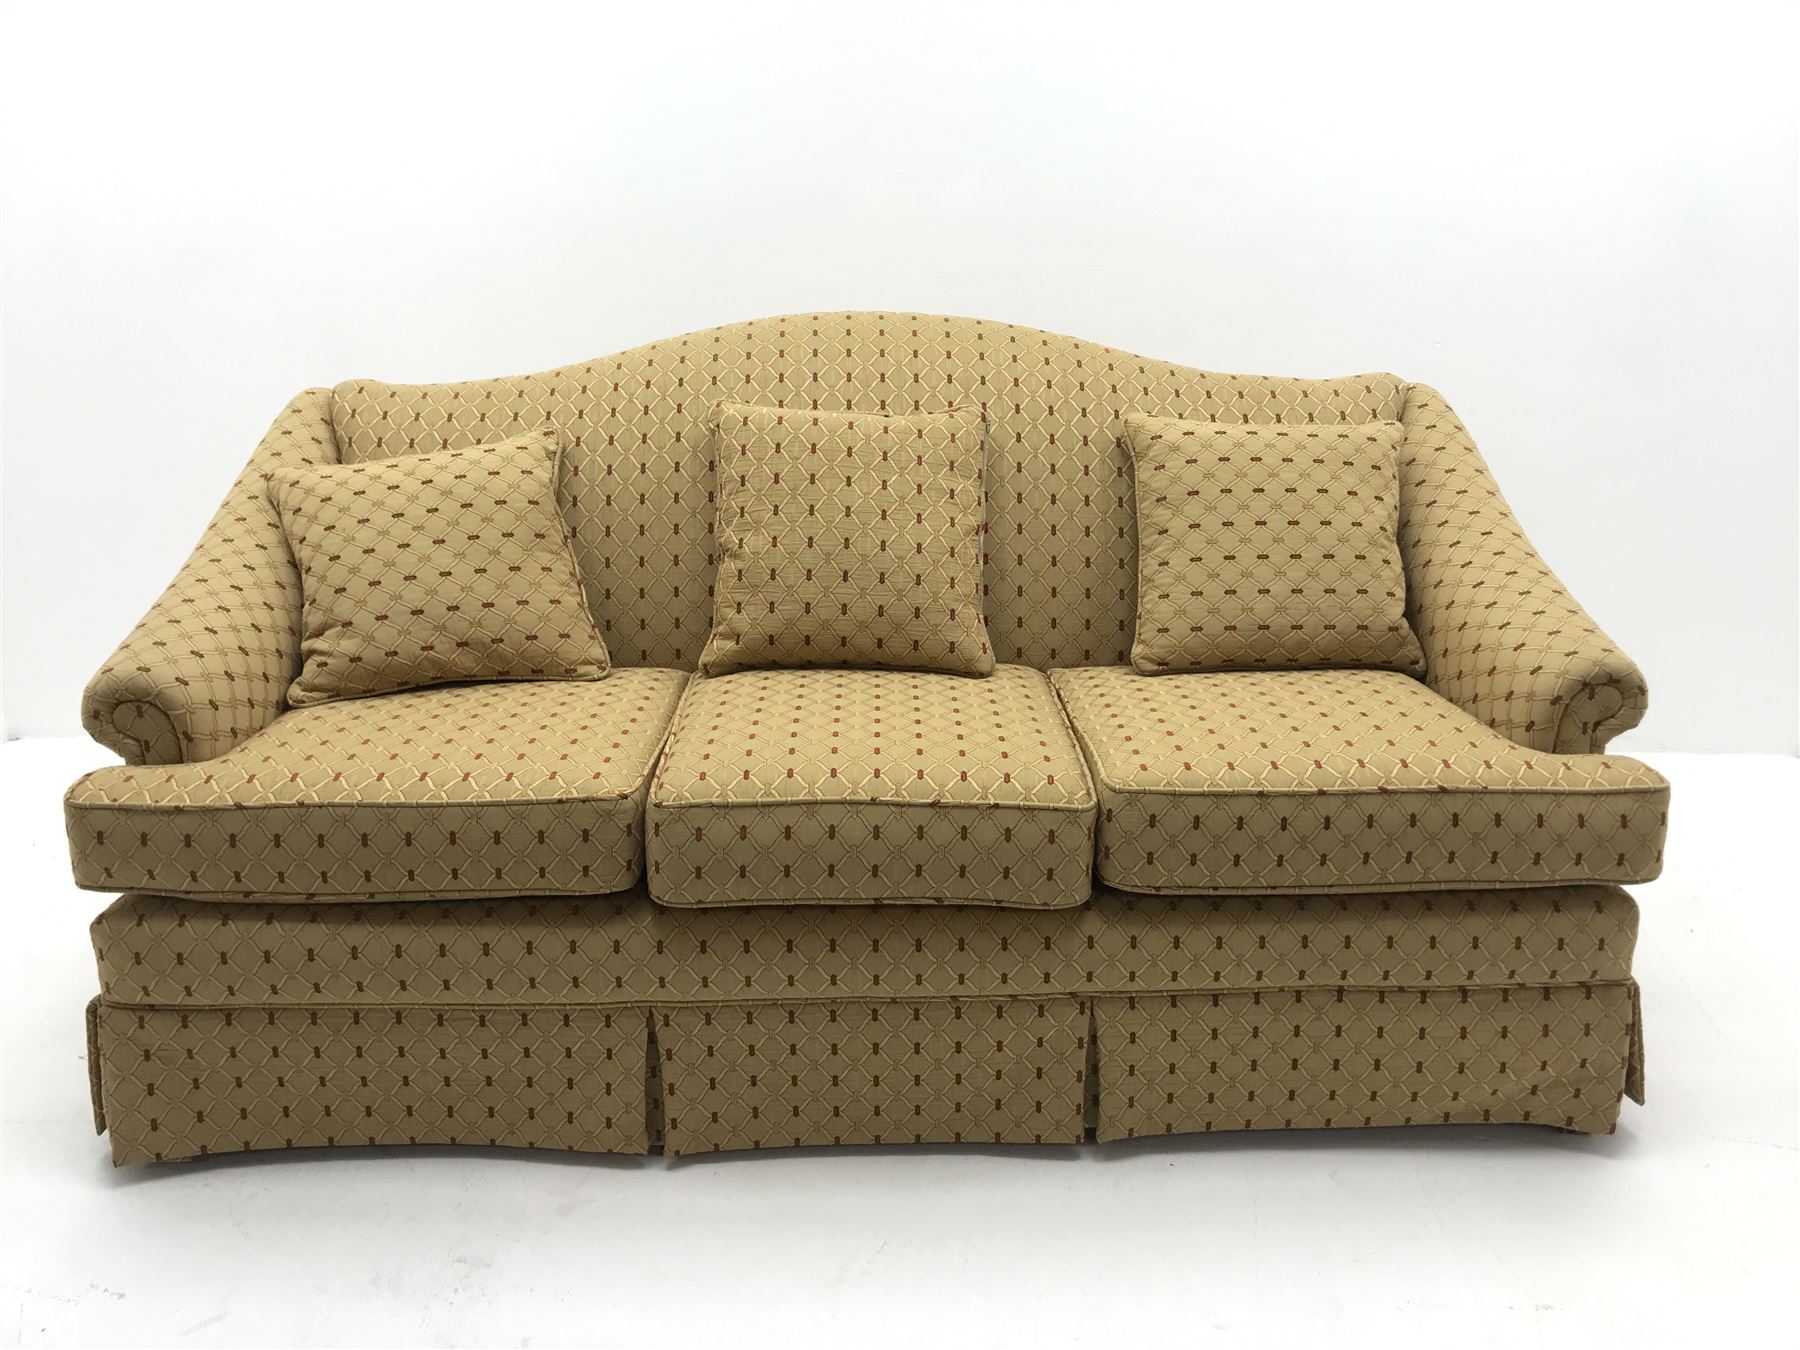 Plumbs Furniture - mahogany framed three seat sofa - Image 2 of 3